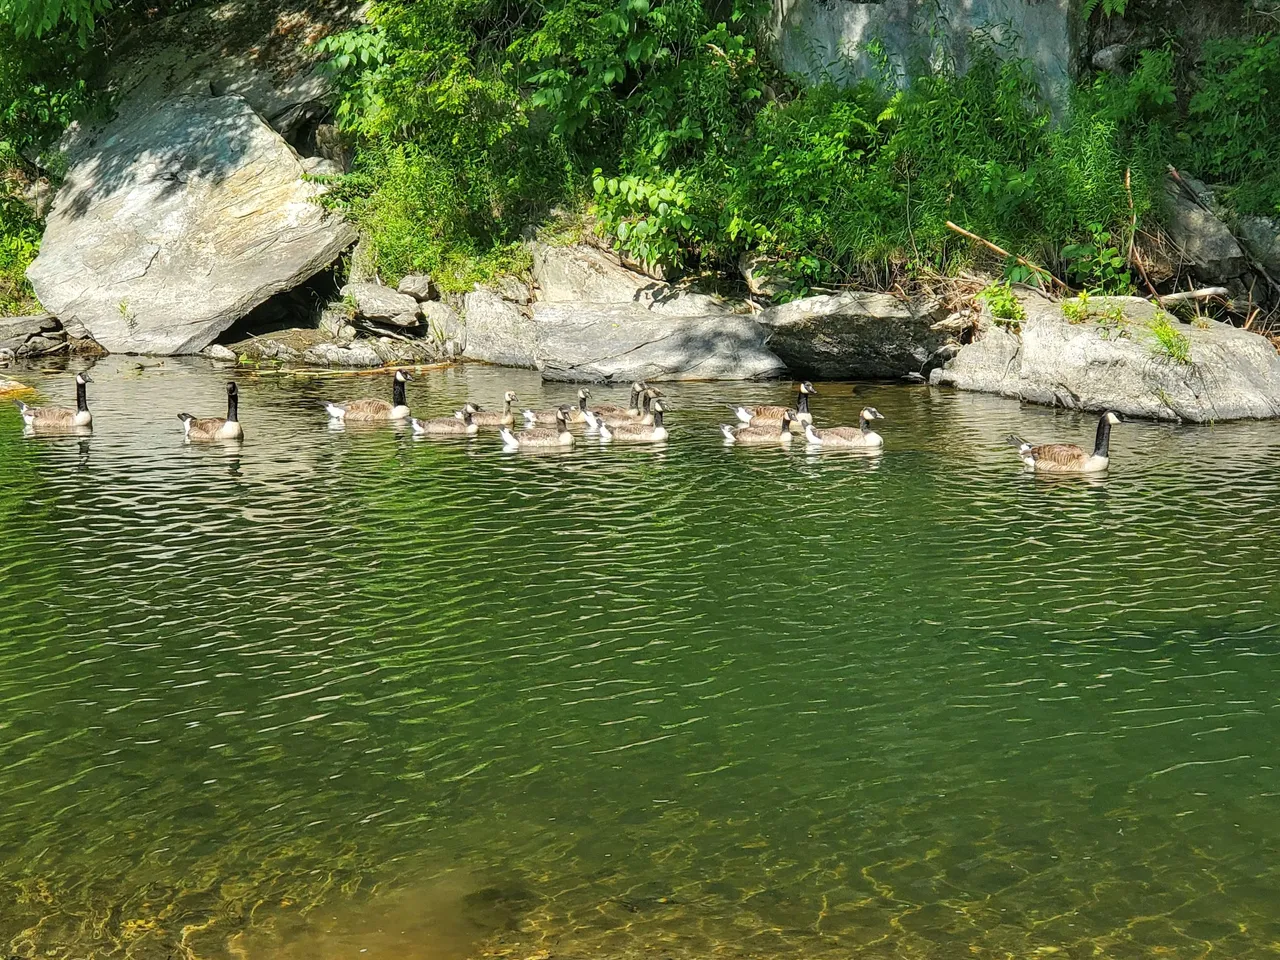 canada geese fambly.jpg